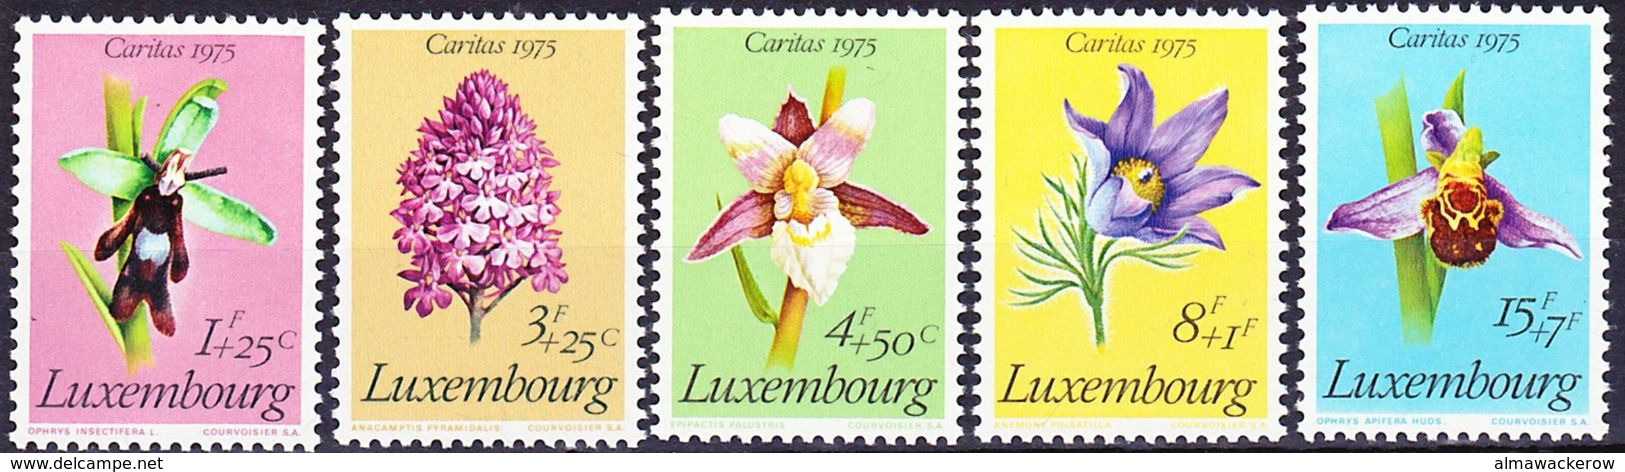 20-051 Luxemburg 1975 Flowers Caritas Complete Set Mi 914-918 MNH ** - 1965-91 Jean